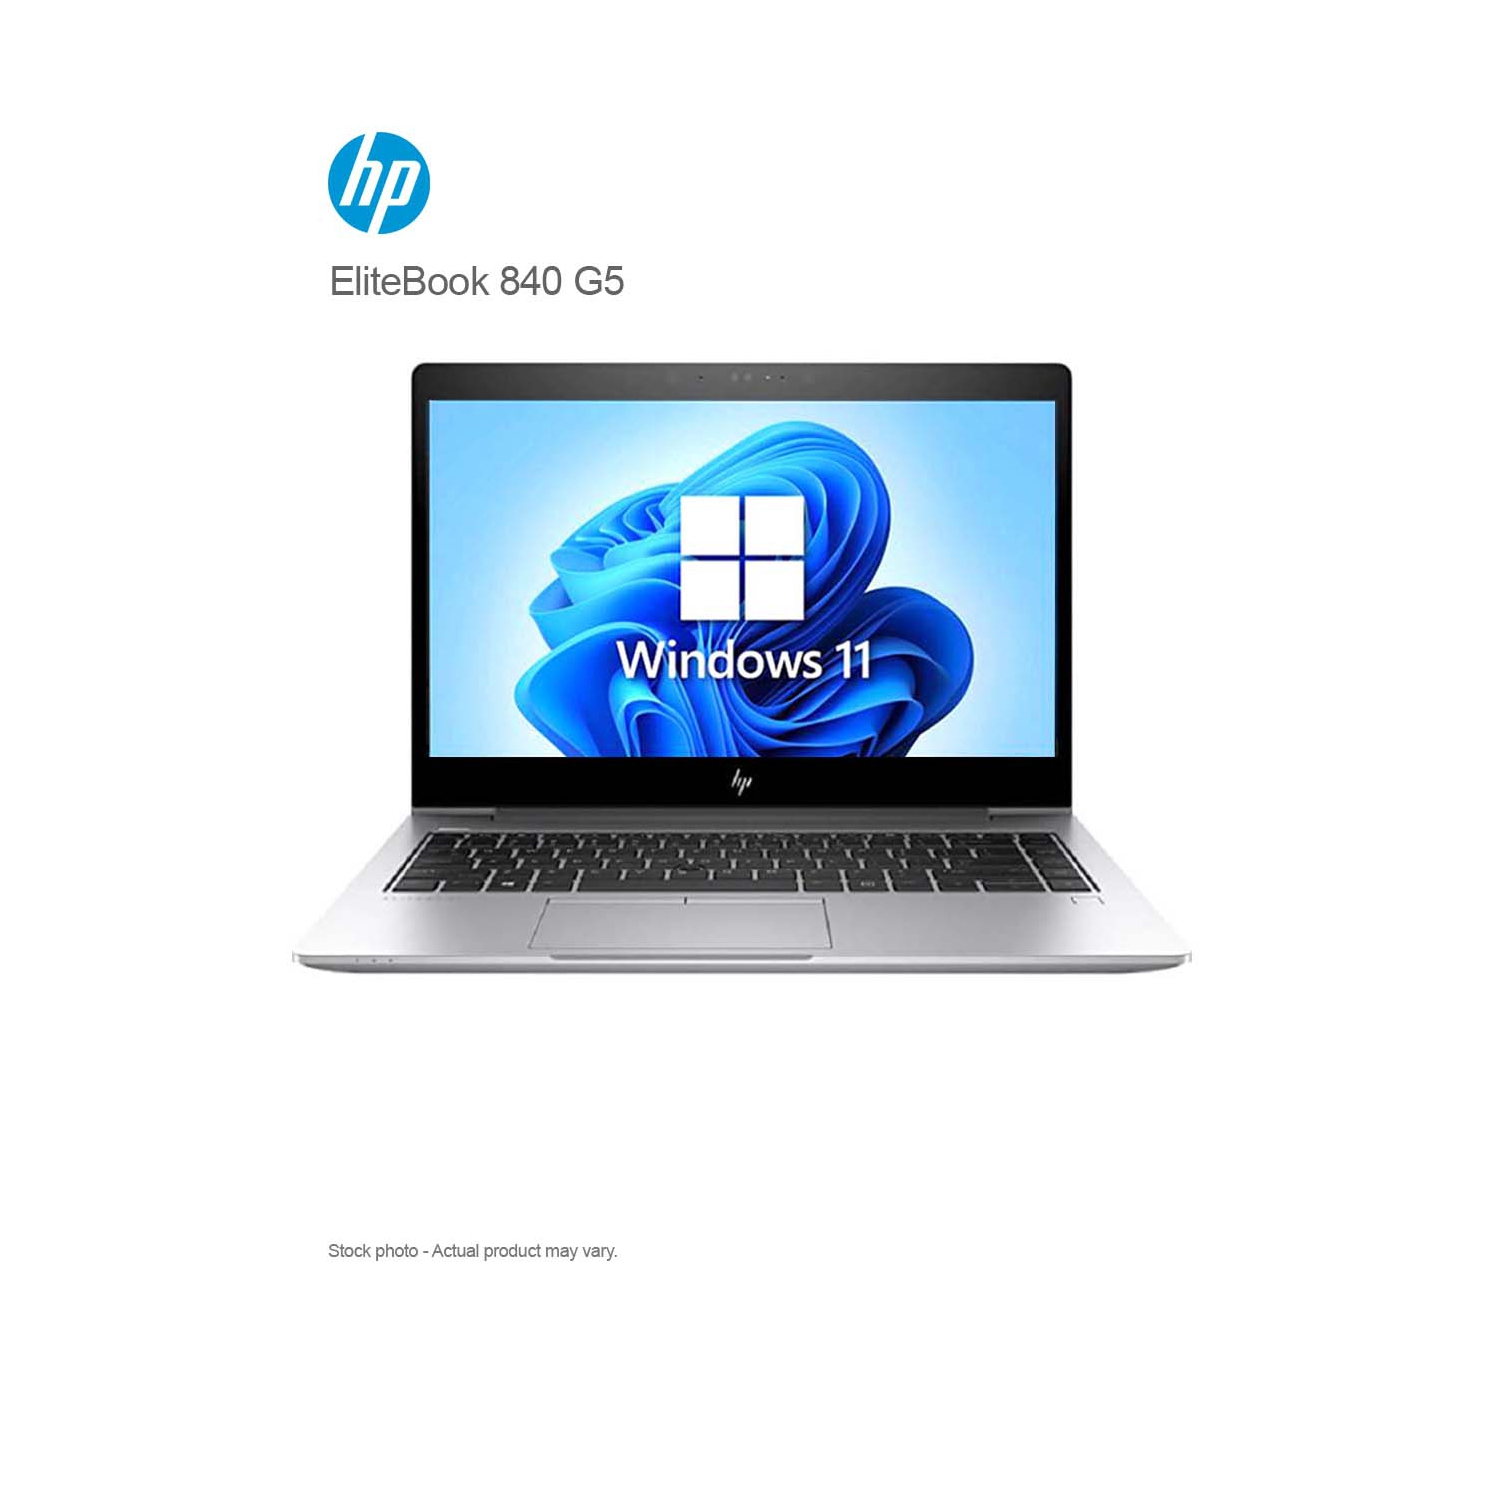 HP EliteBook 840 G5 Core i5-8250U, 8GB, 256GB SSD, 14″ FHD 1920 x 1080, Webcam, HDMI, TYPE-C, WIN 11 PRO - Refurbished (Excellent)